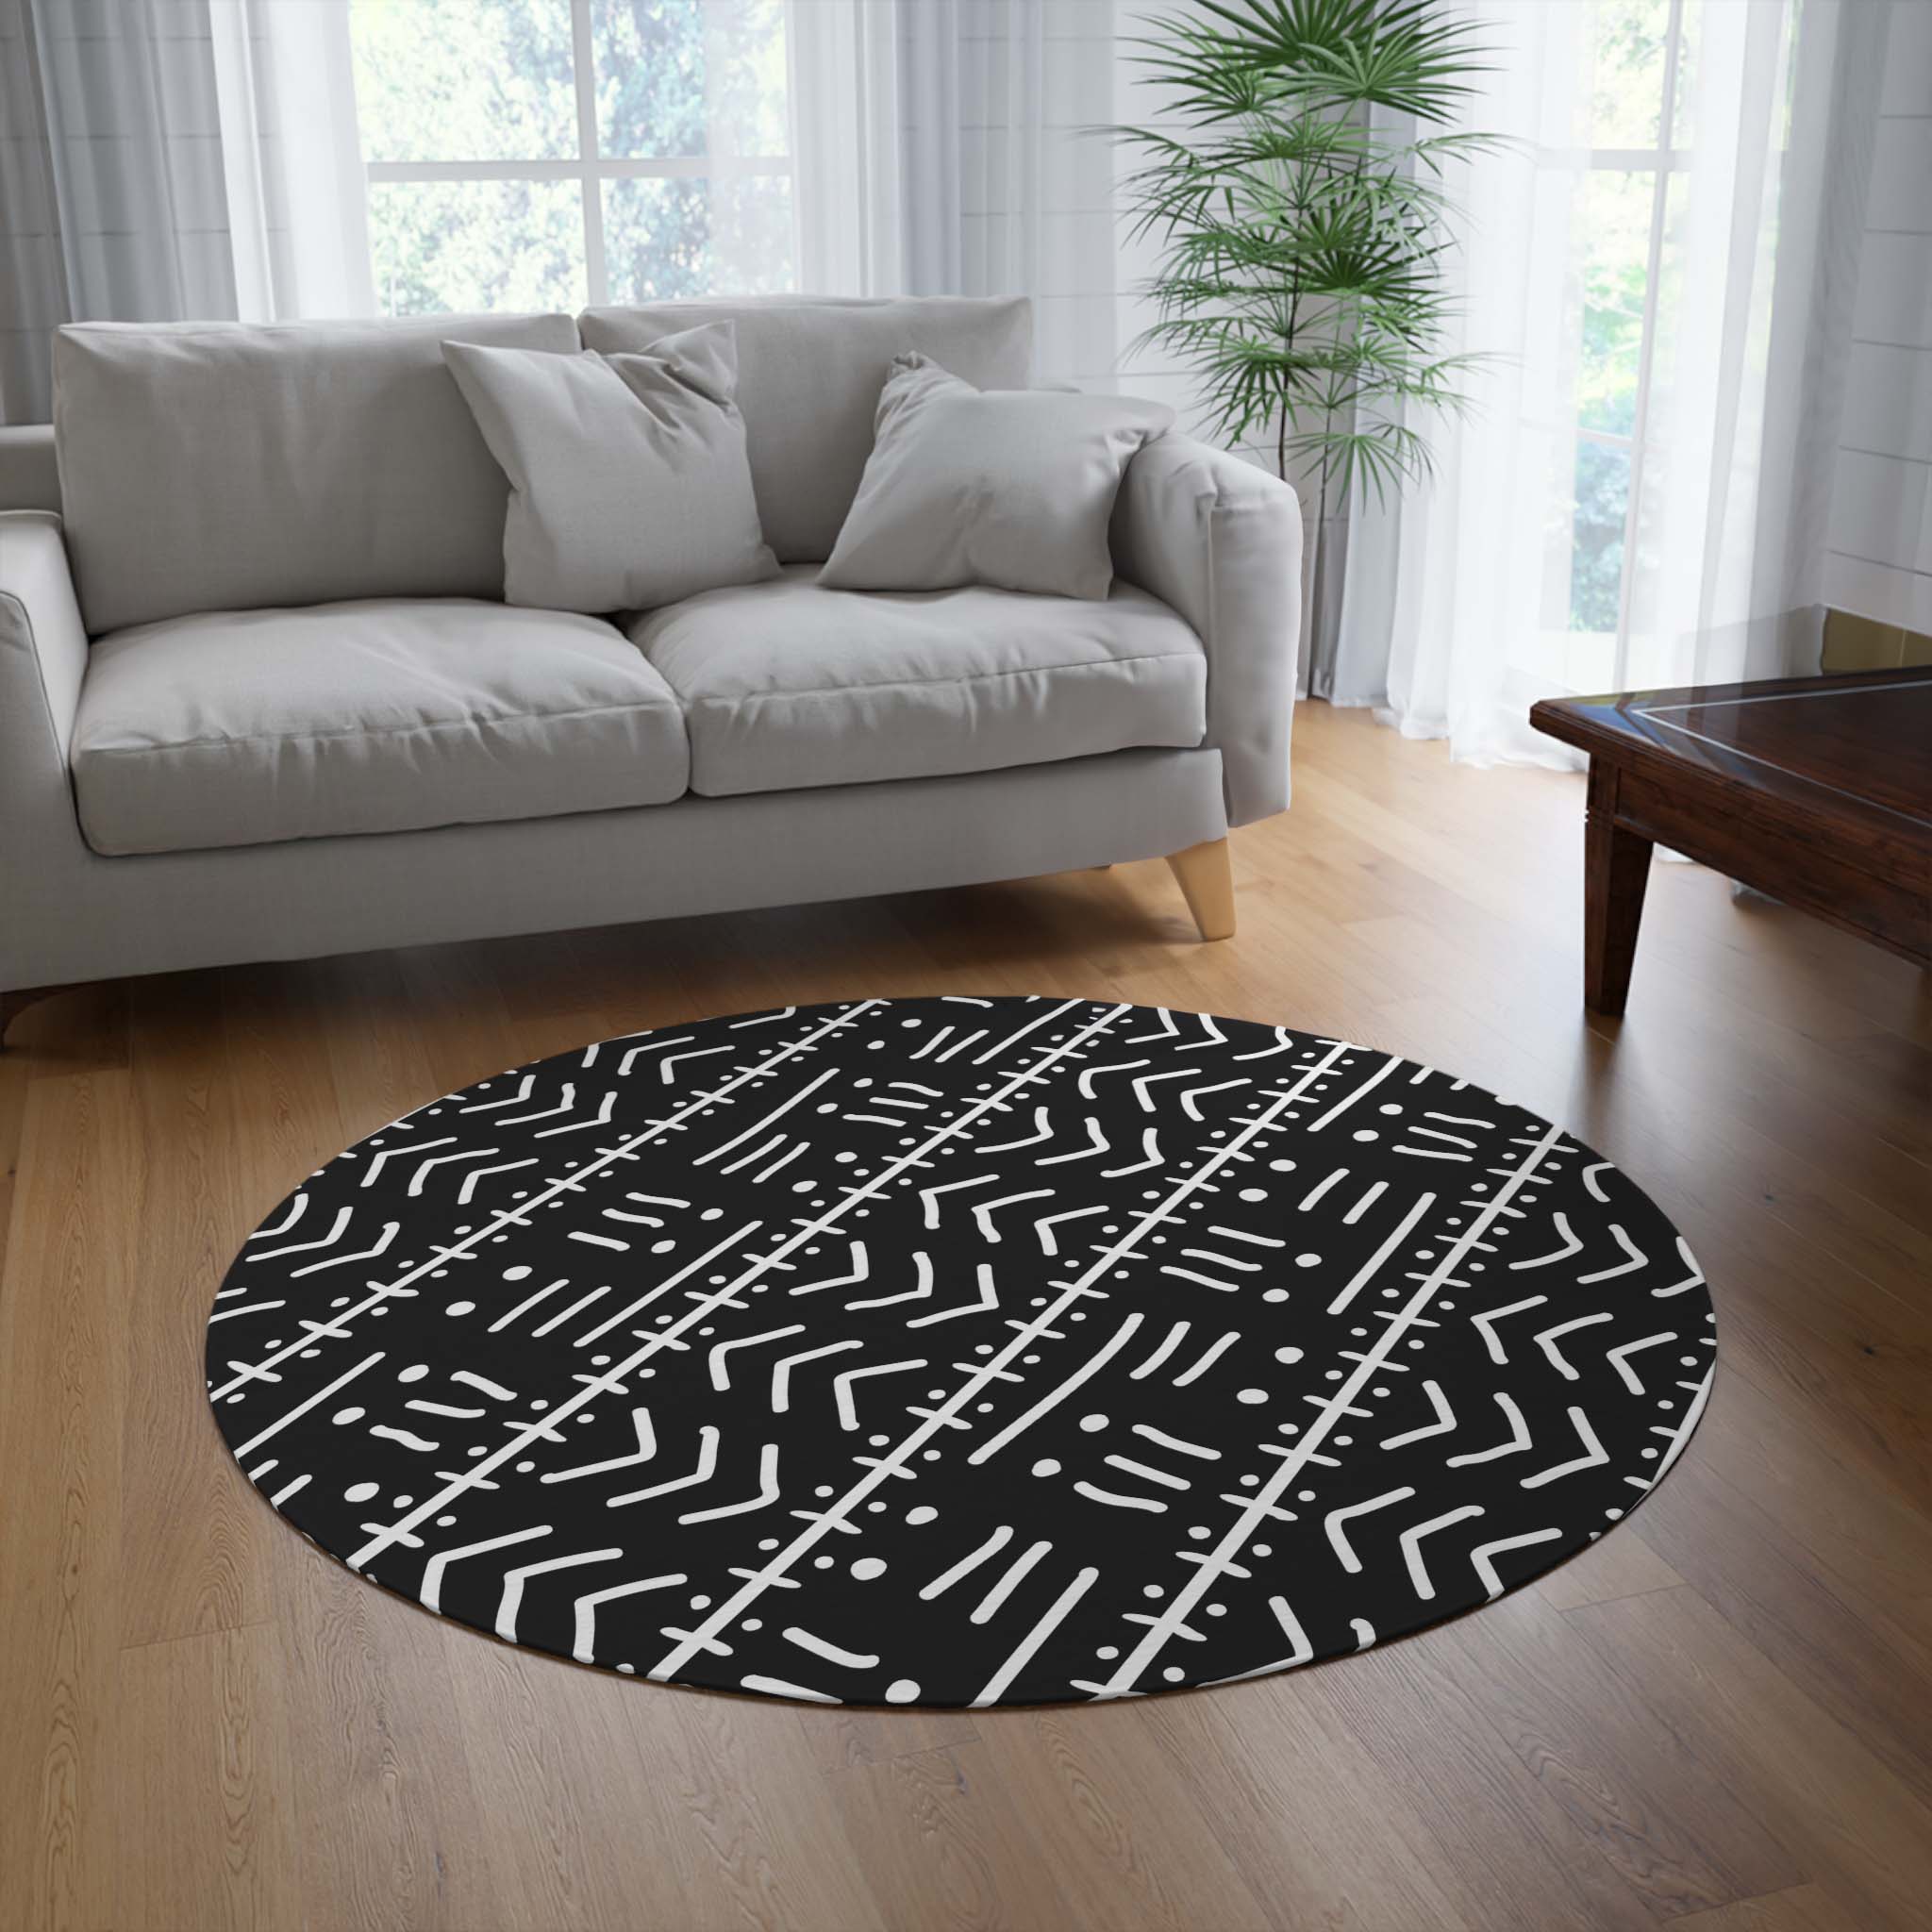 Round African Tribal Rug Black & White Carpet - Bynelo